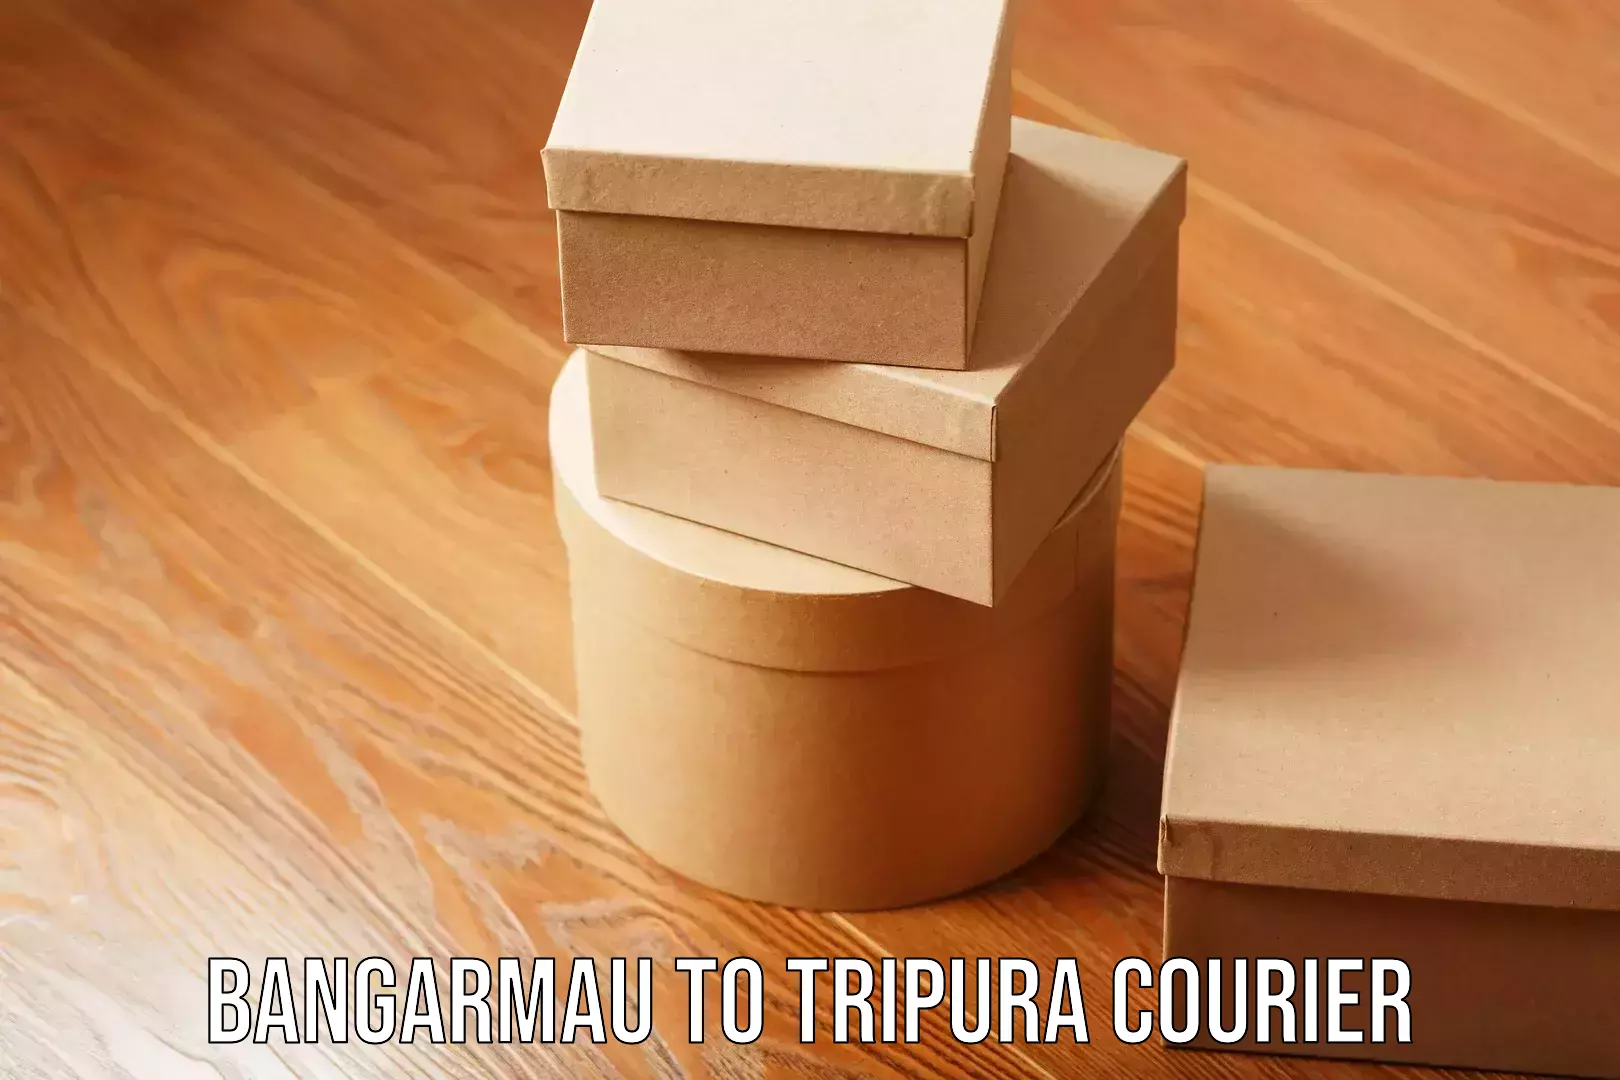 Urgent courier needs Bangarmau to Tripura